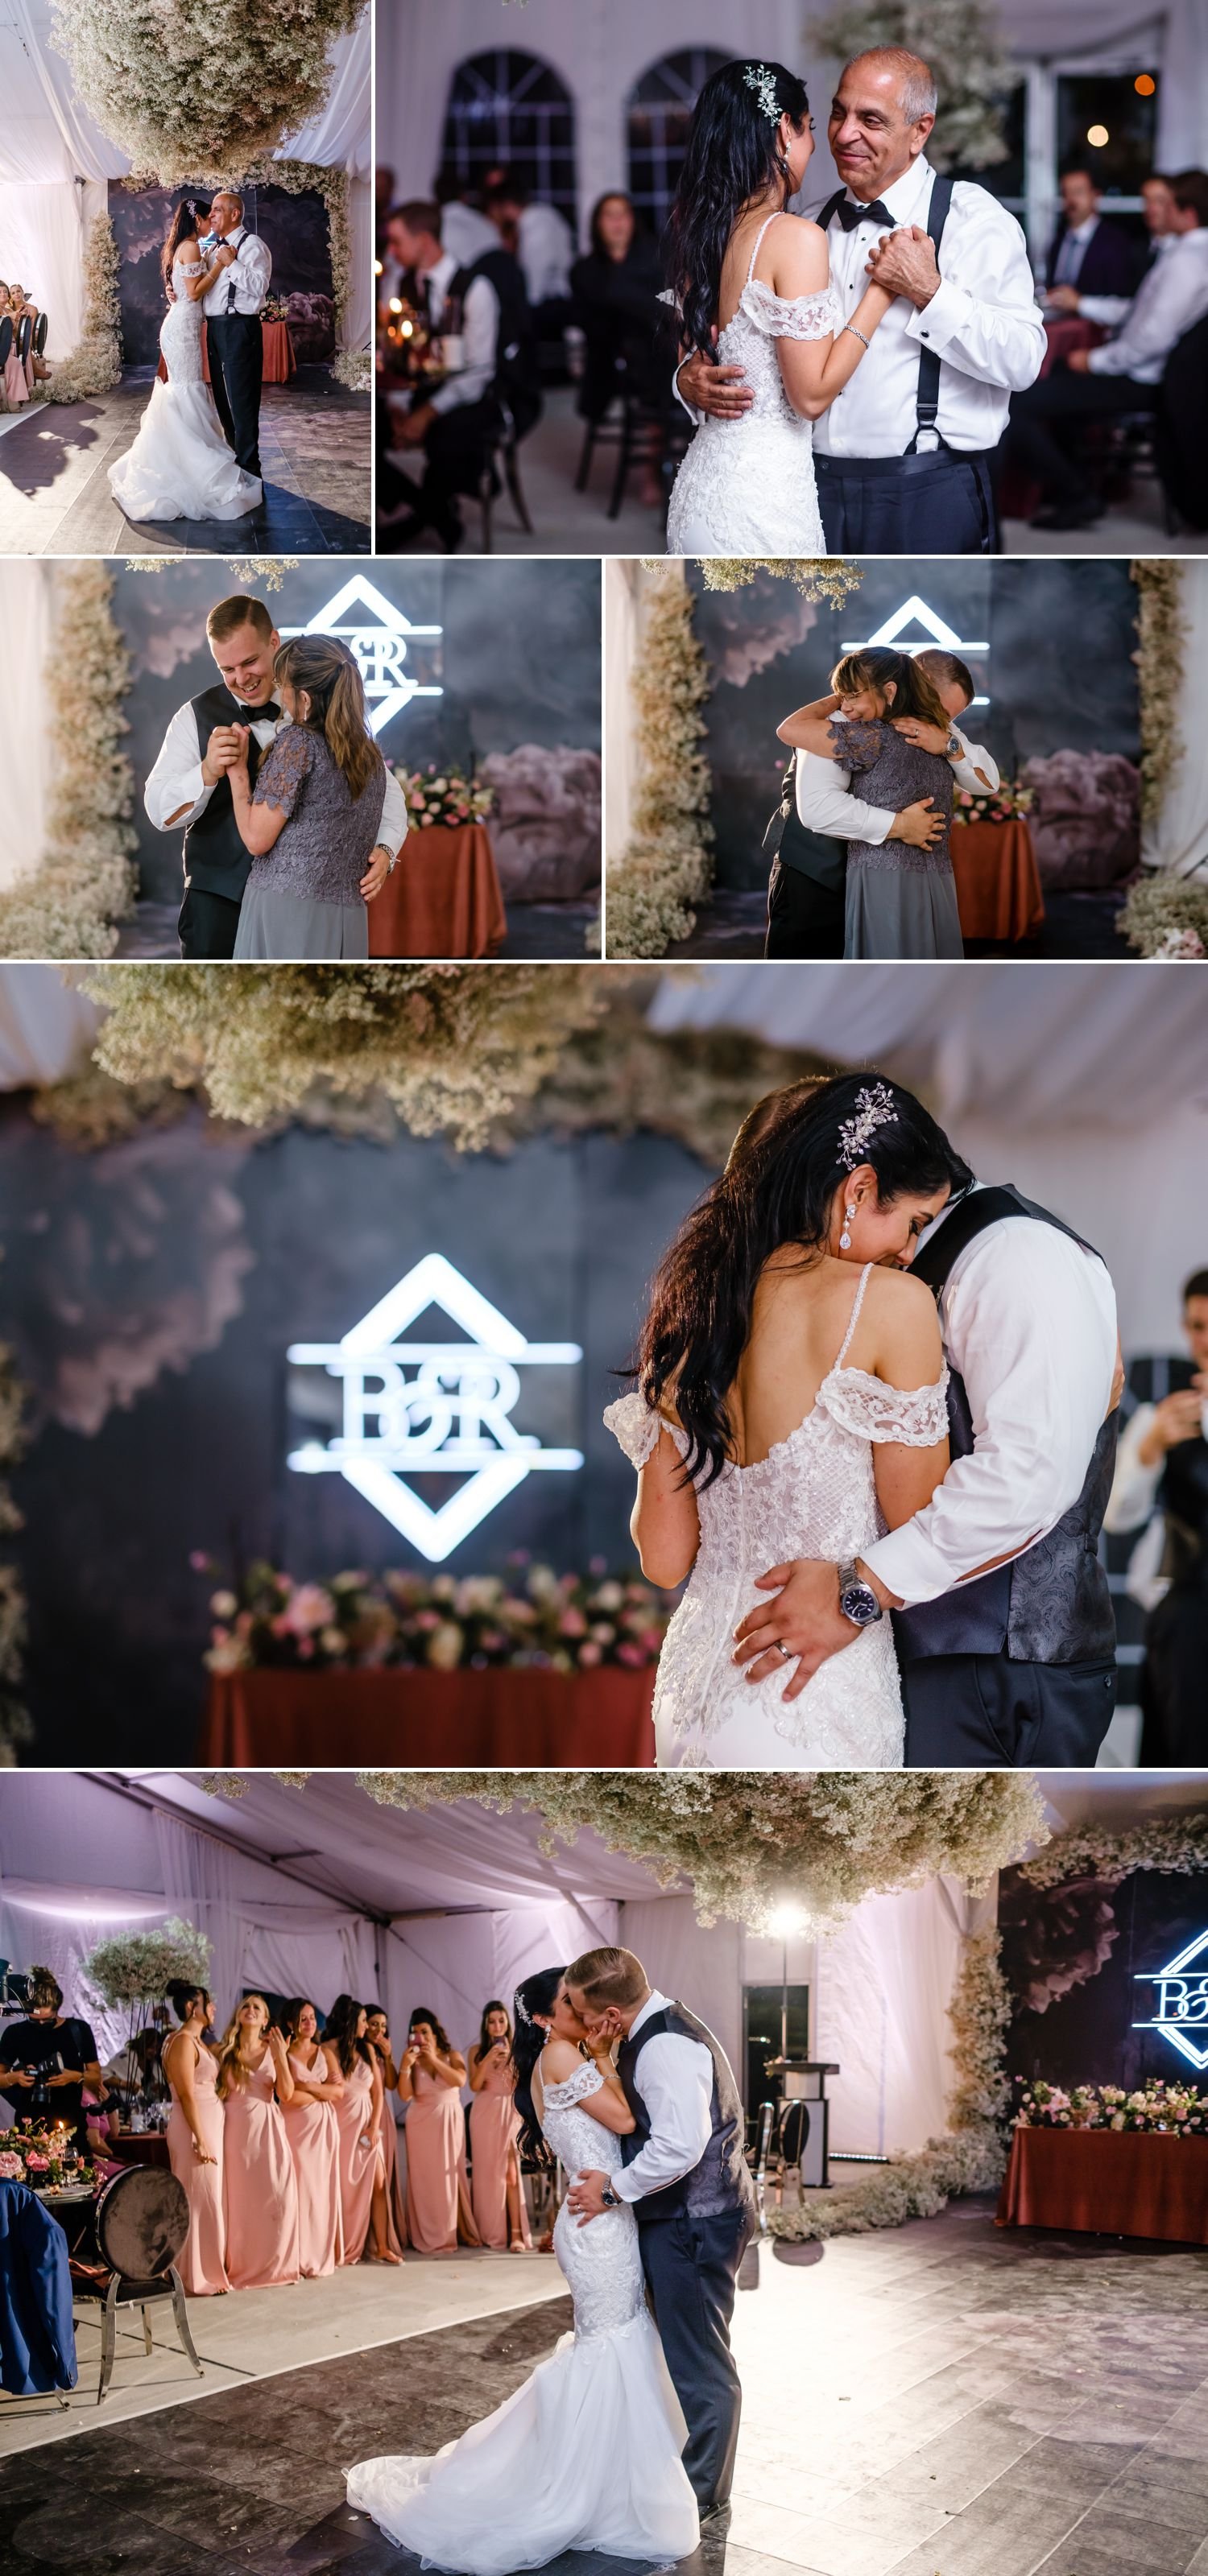 special dances during a brookstreet hotel wedding reception in kanata